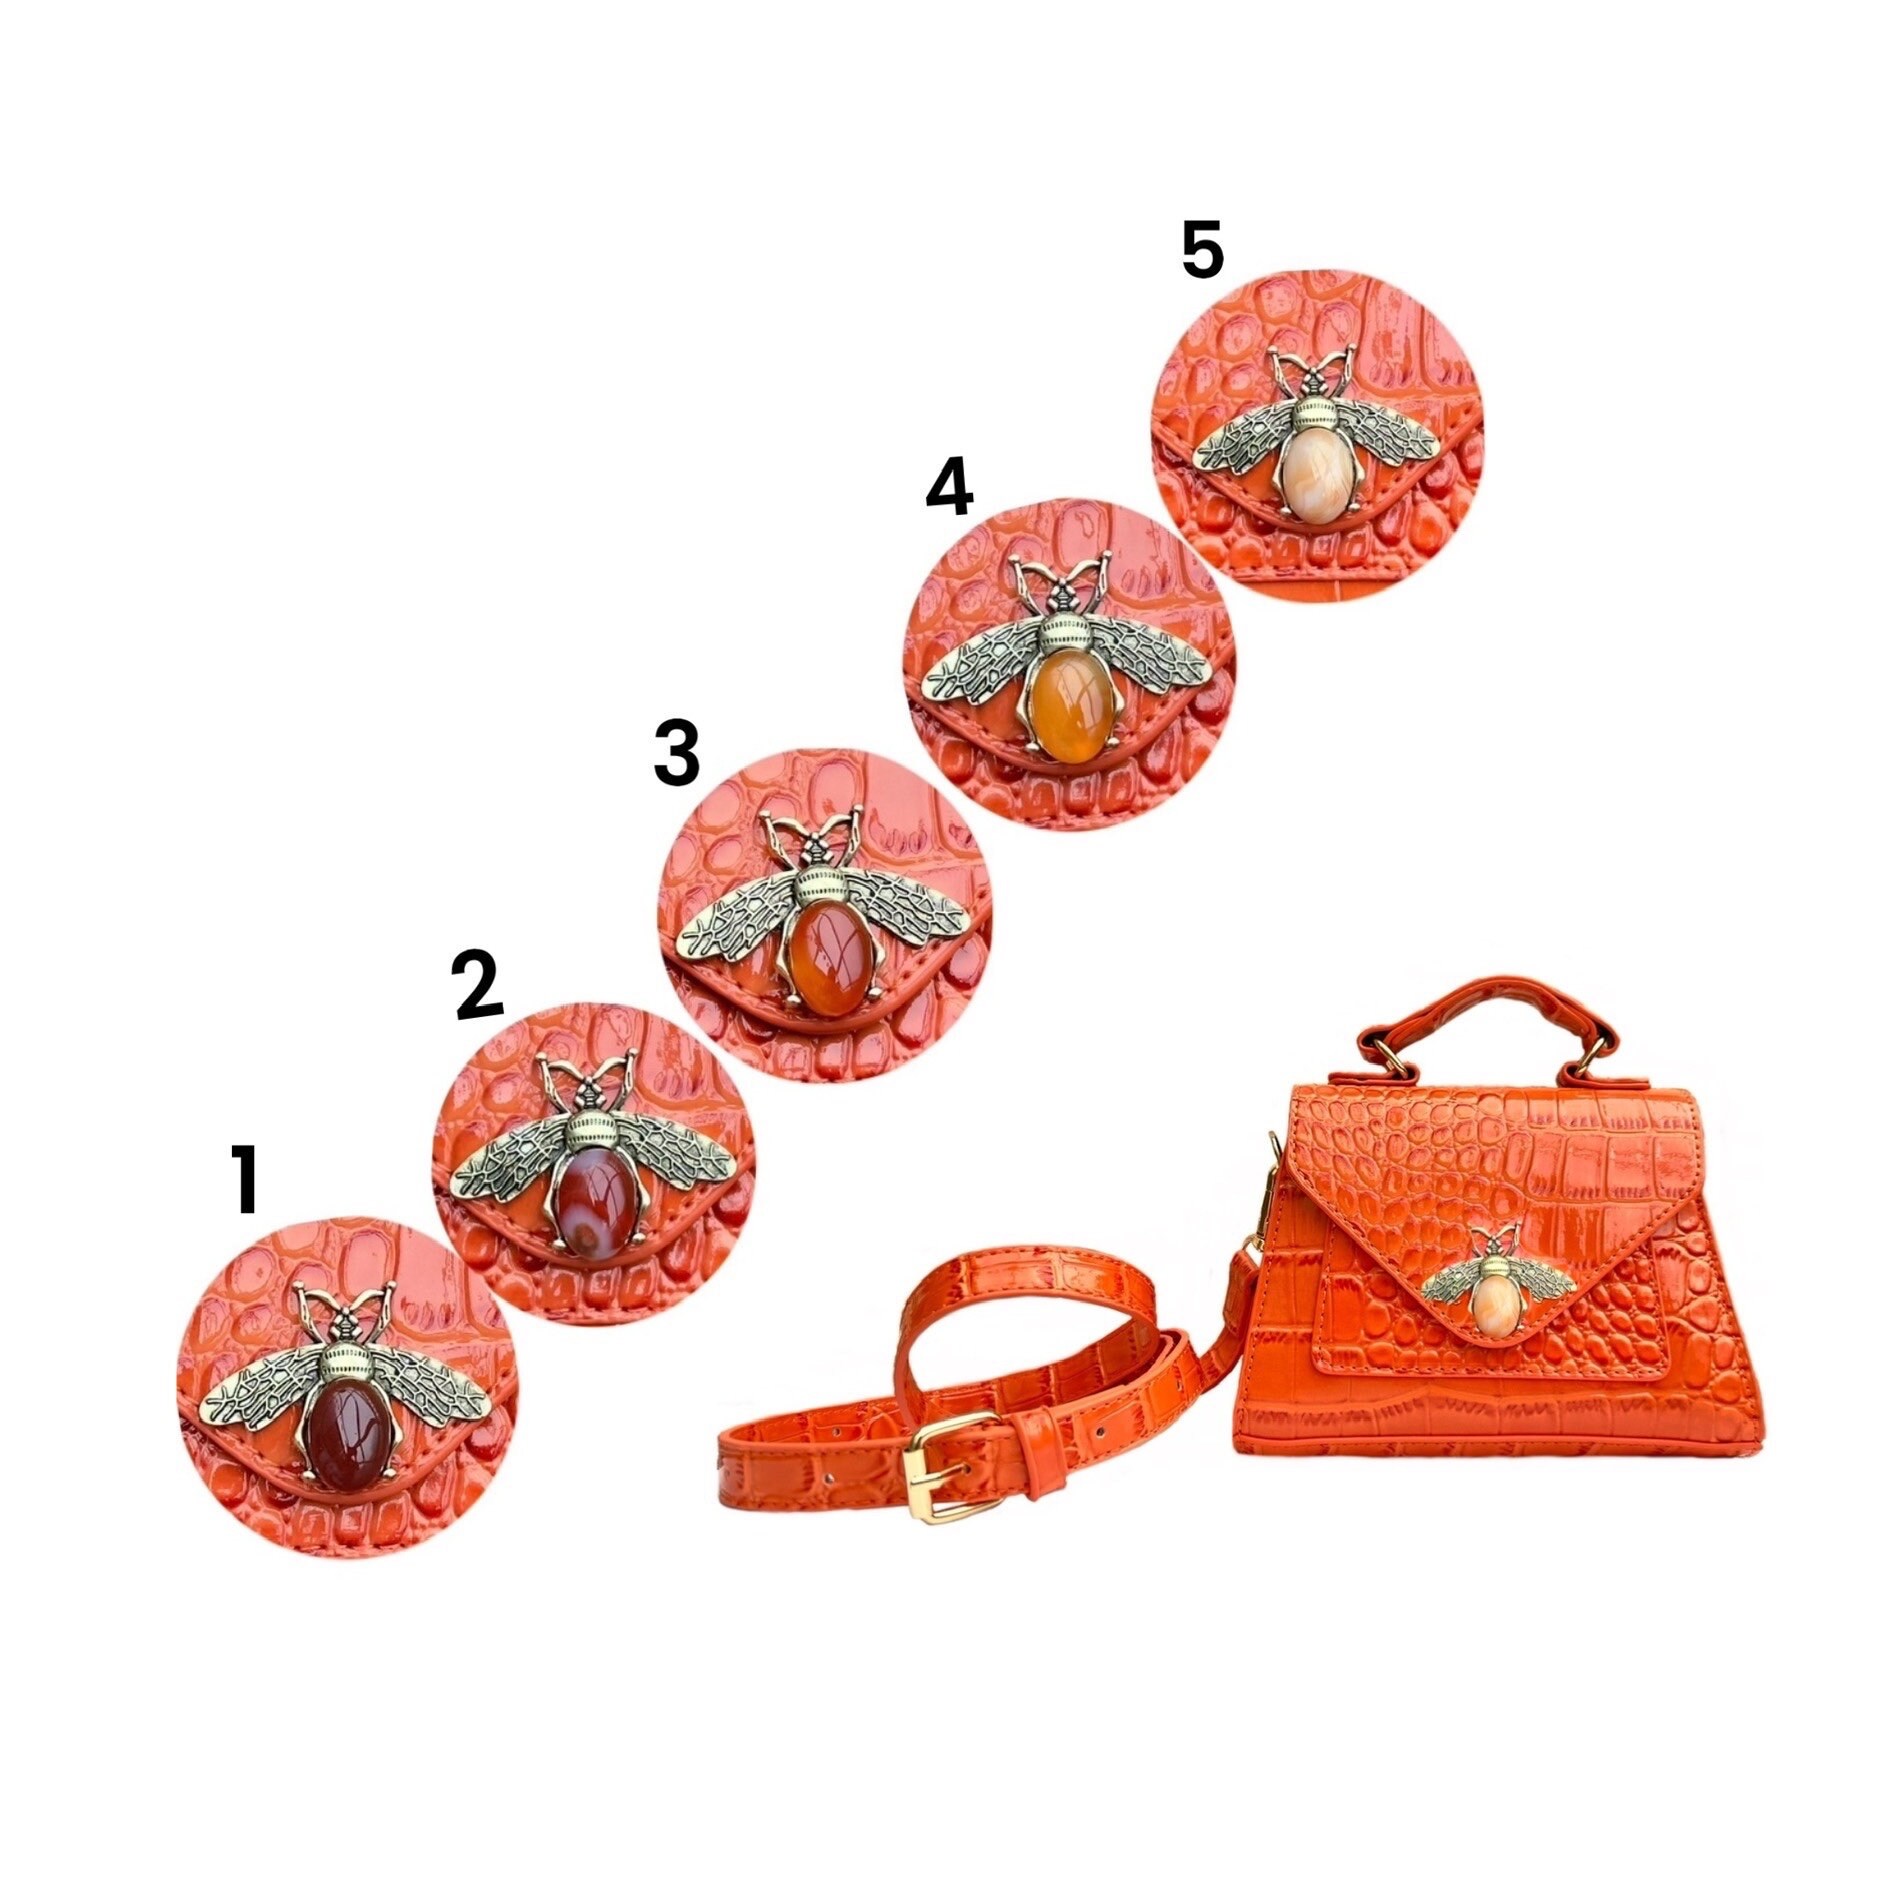 Dolce & Gabbana Orange Handbags